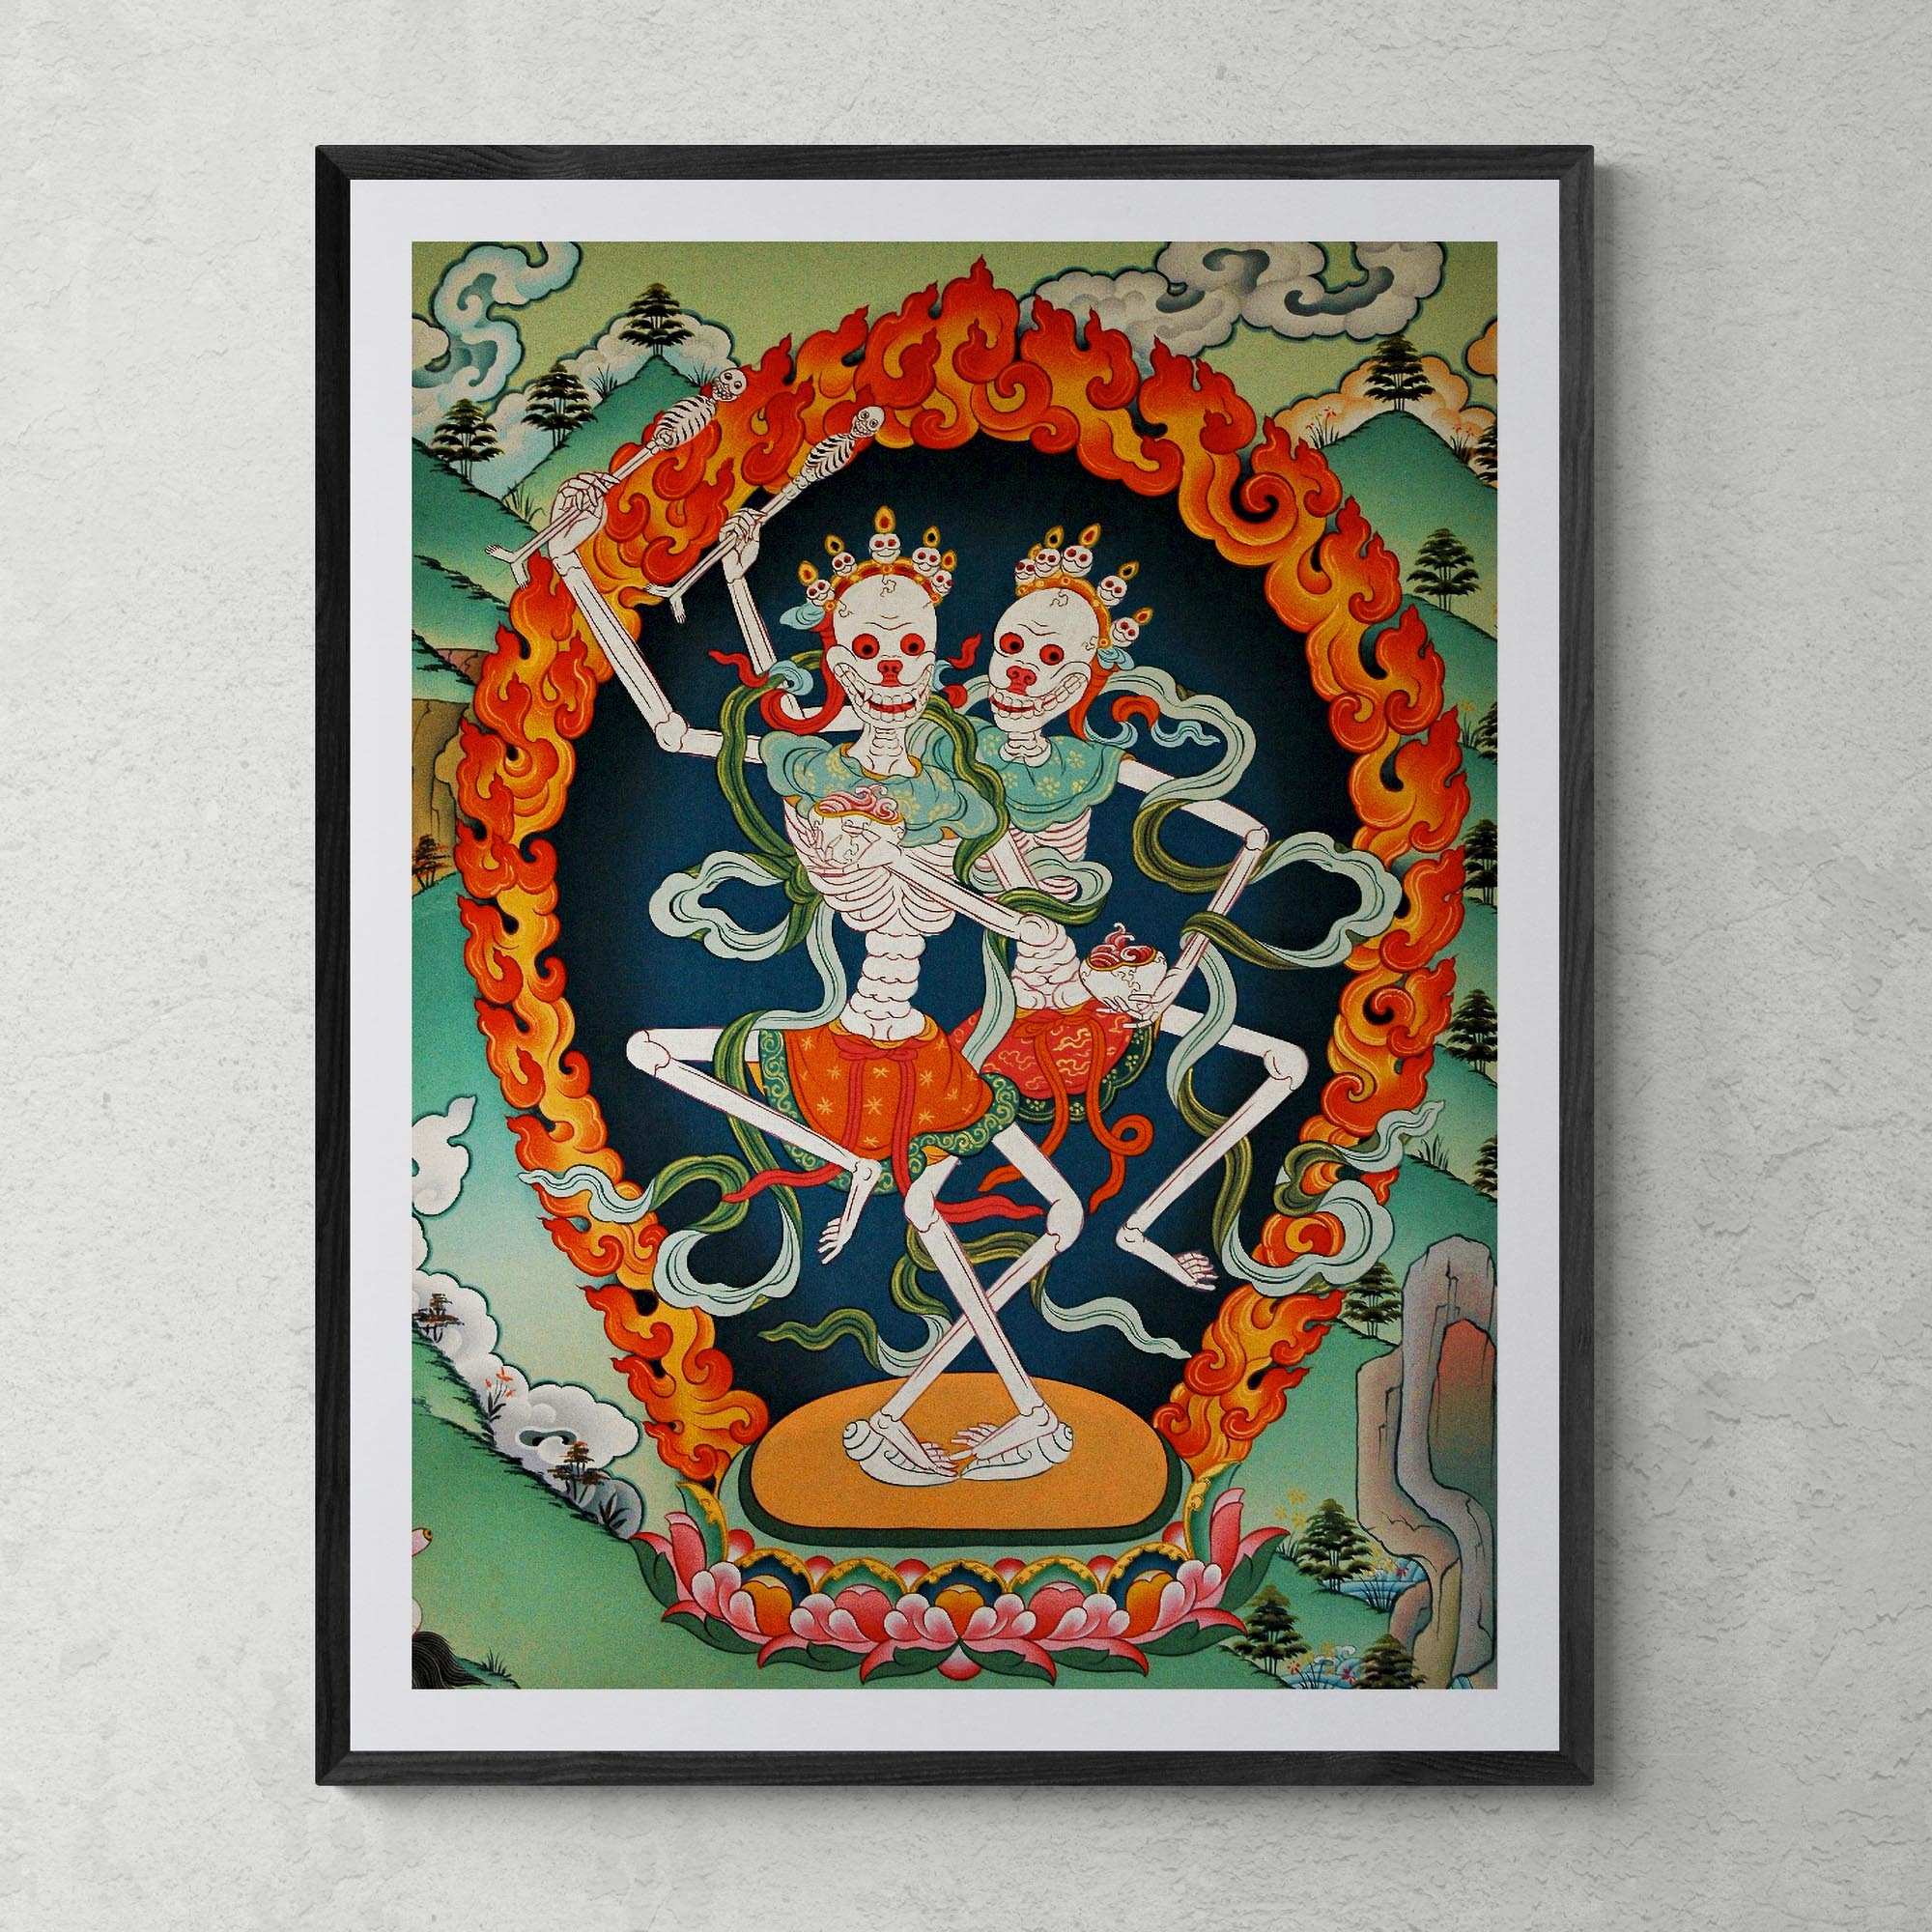 Framed Print 6"x8" / Black Frame Citipati, Tibetan Protector, Thangka, Skeleton Lord and Lady of the Cemetery Nepal Buddhist Decor Wall Art Framed Art Print